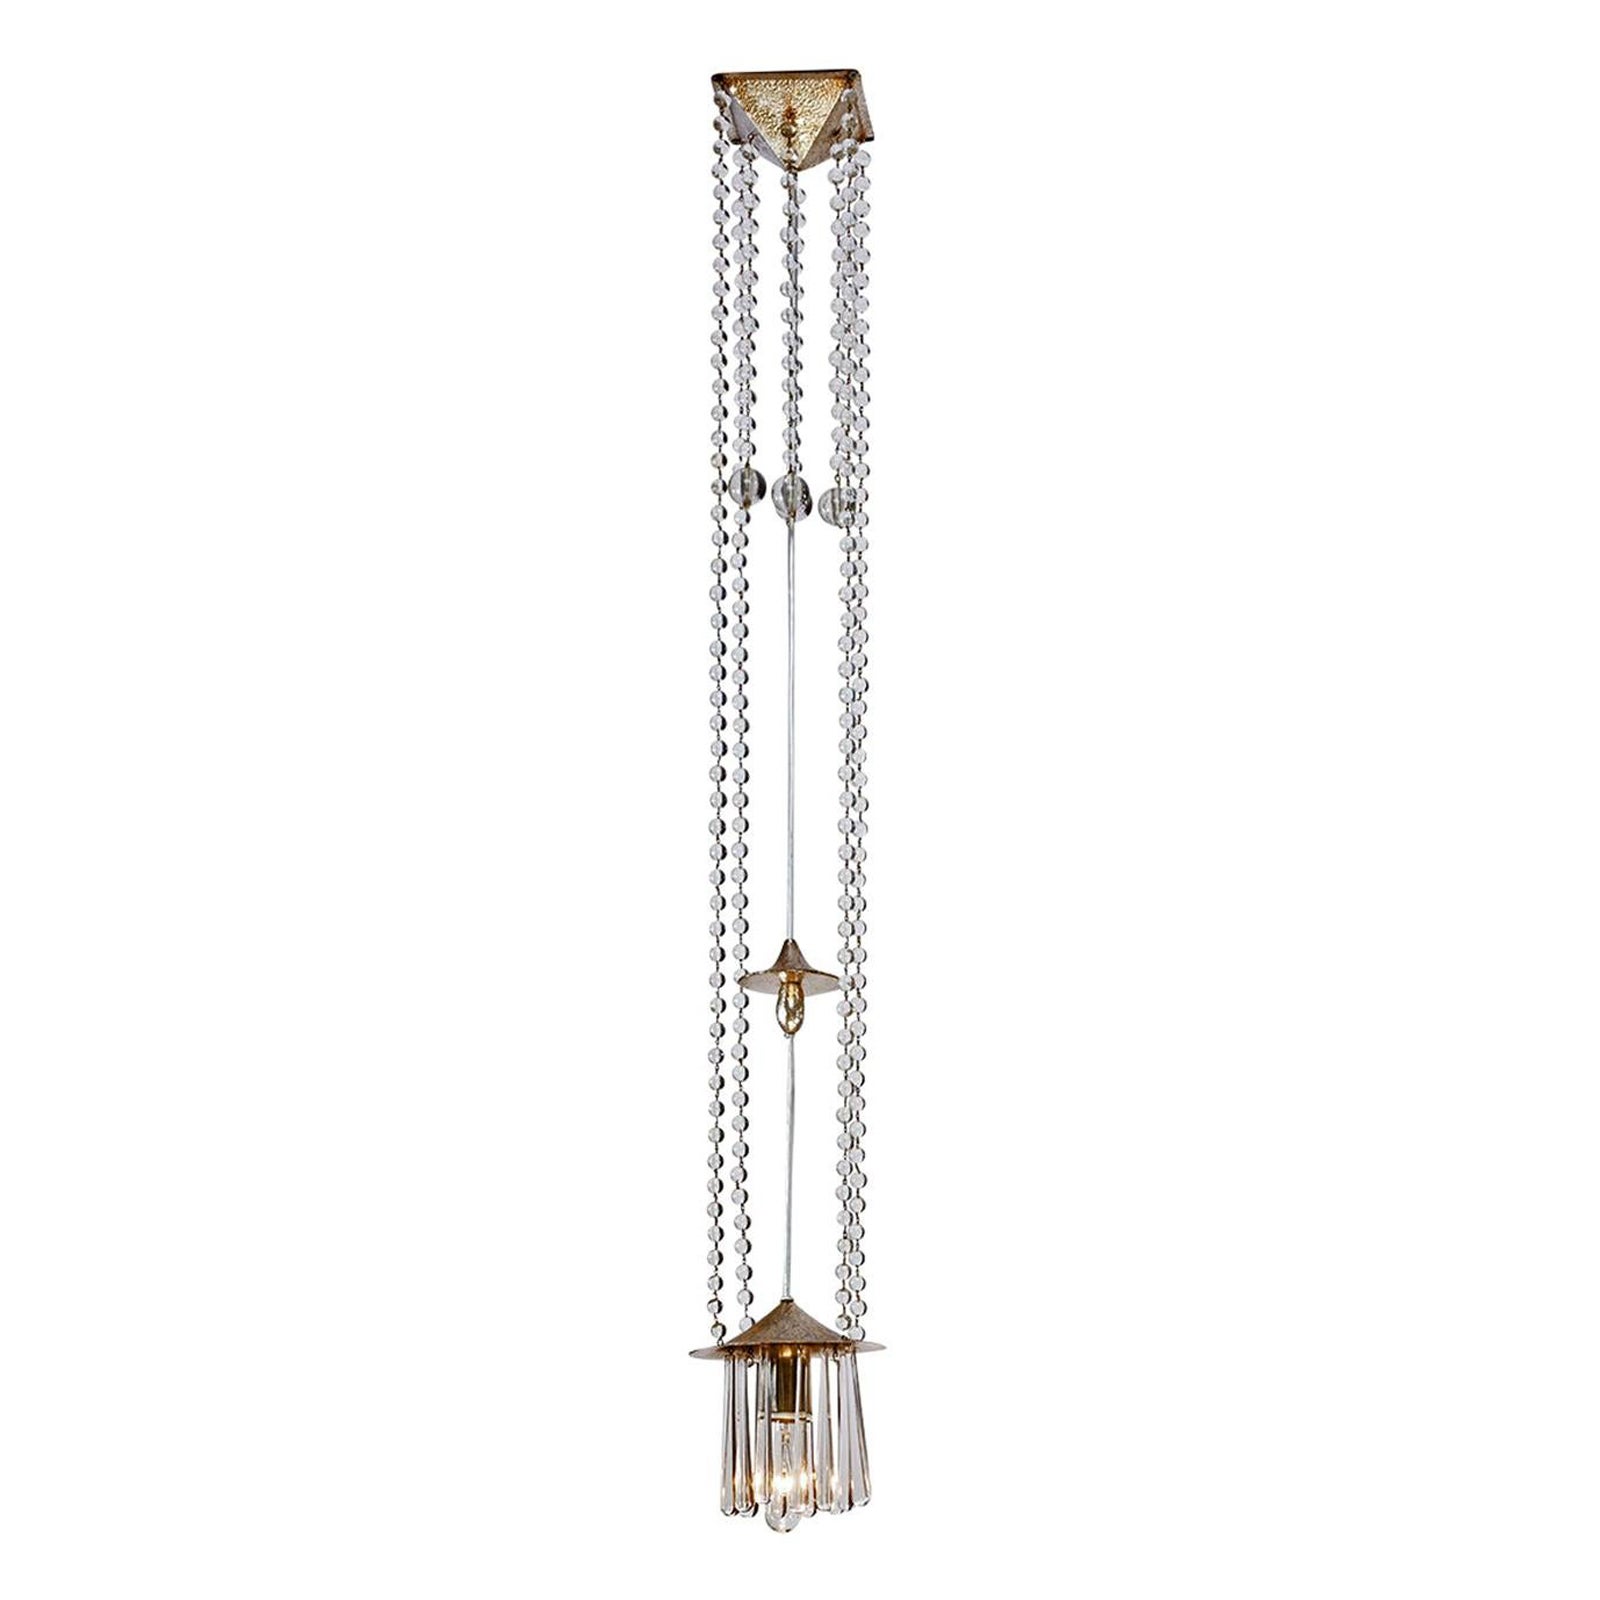 Josef Hoffmann & Wiener Werkstaette Hanging Lamp Chandelier, Pendant, Re-Edition For Sale